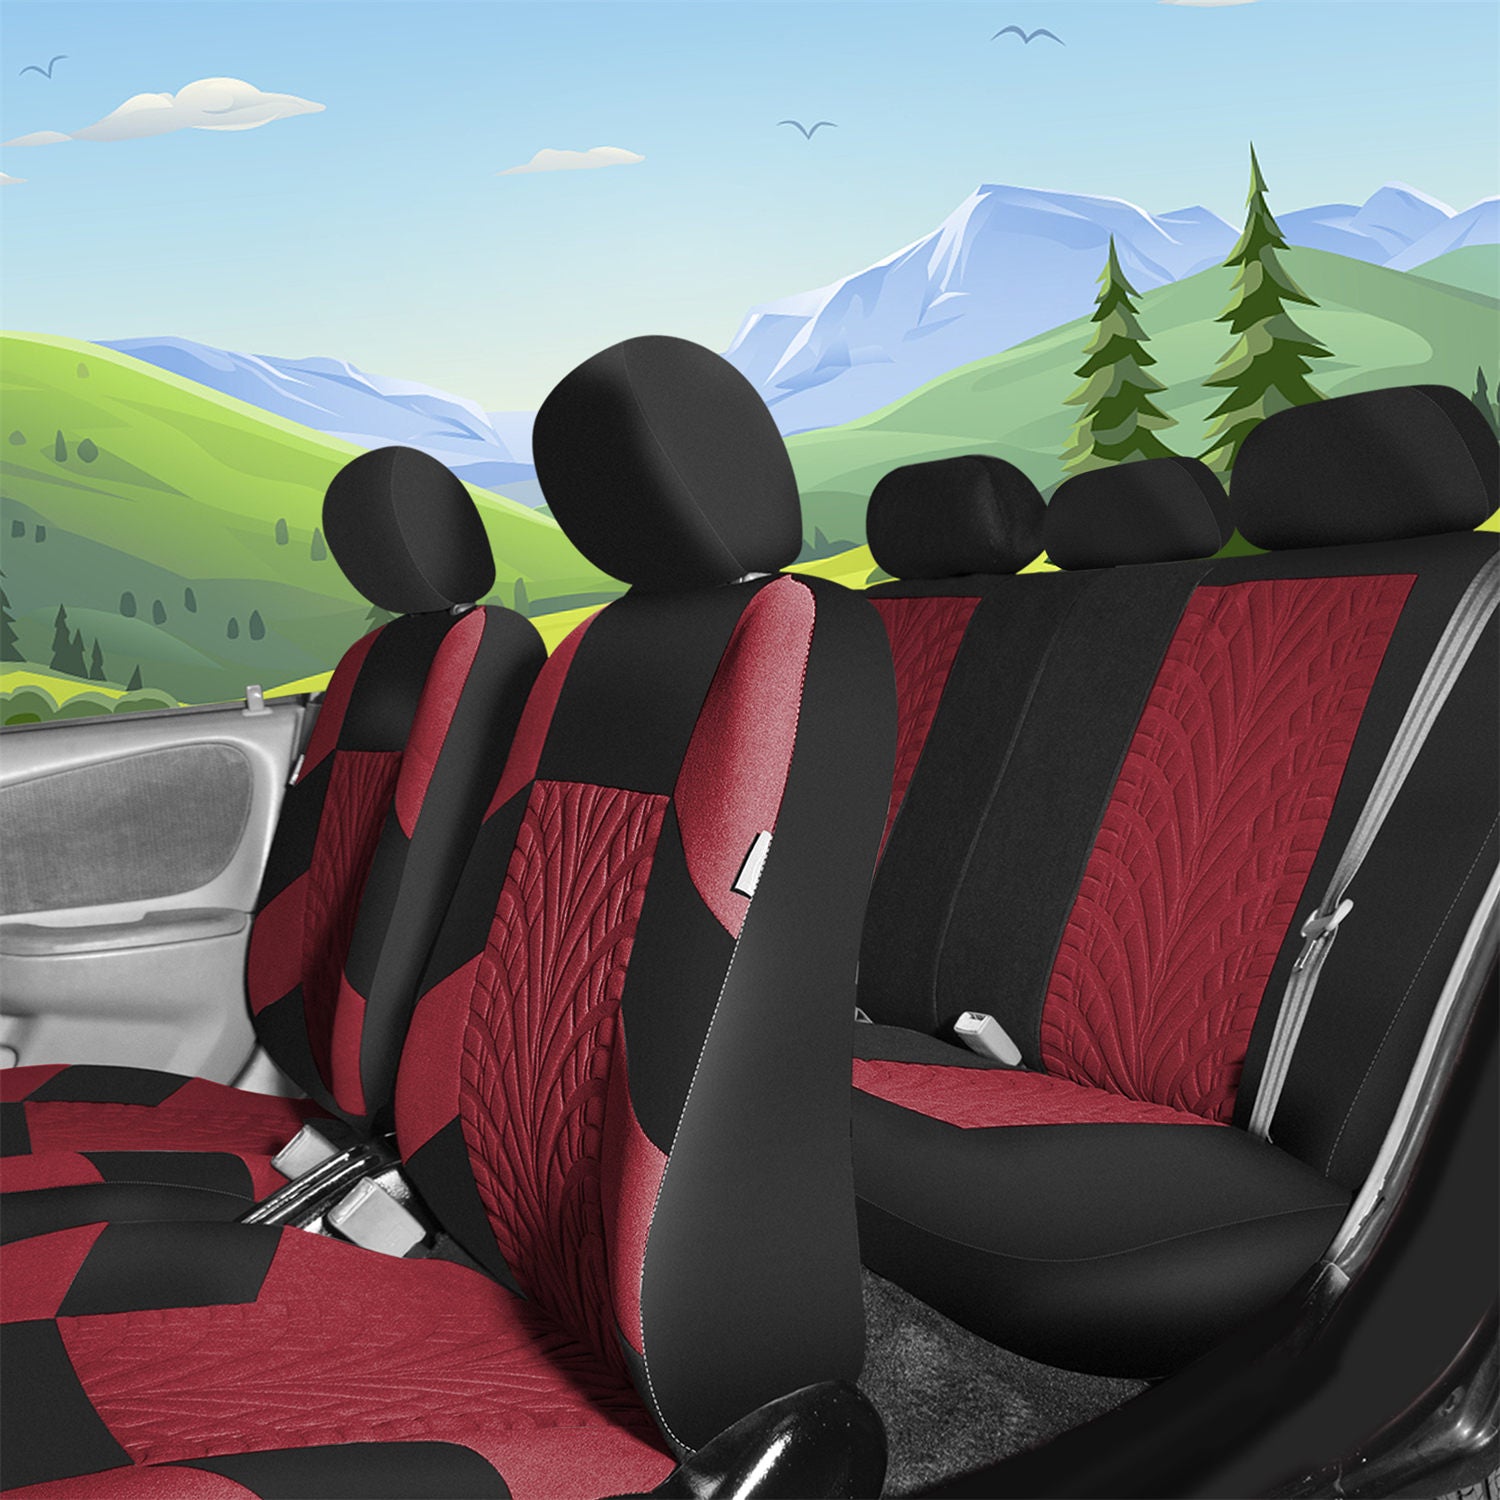 Travel Master Seat Covers - Full Set Burgundy